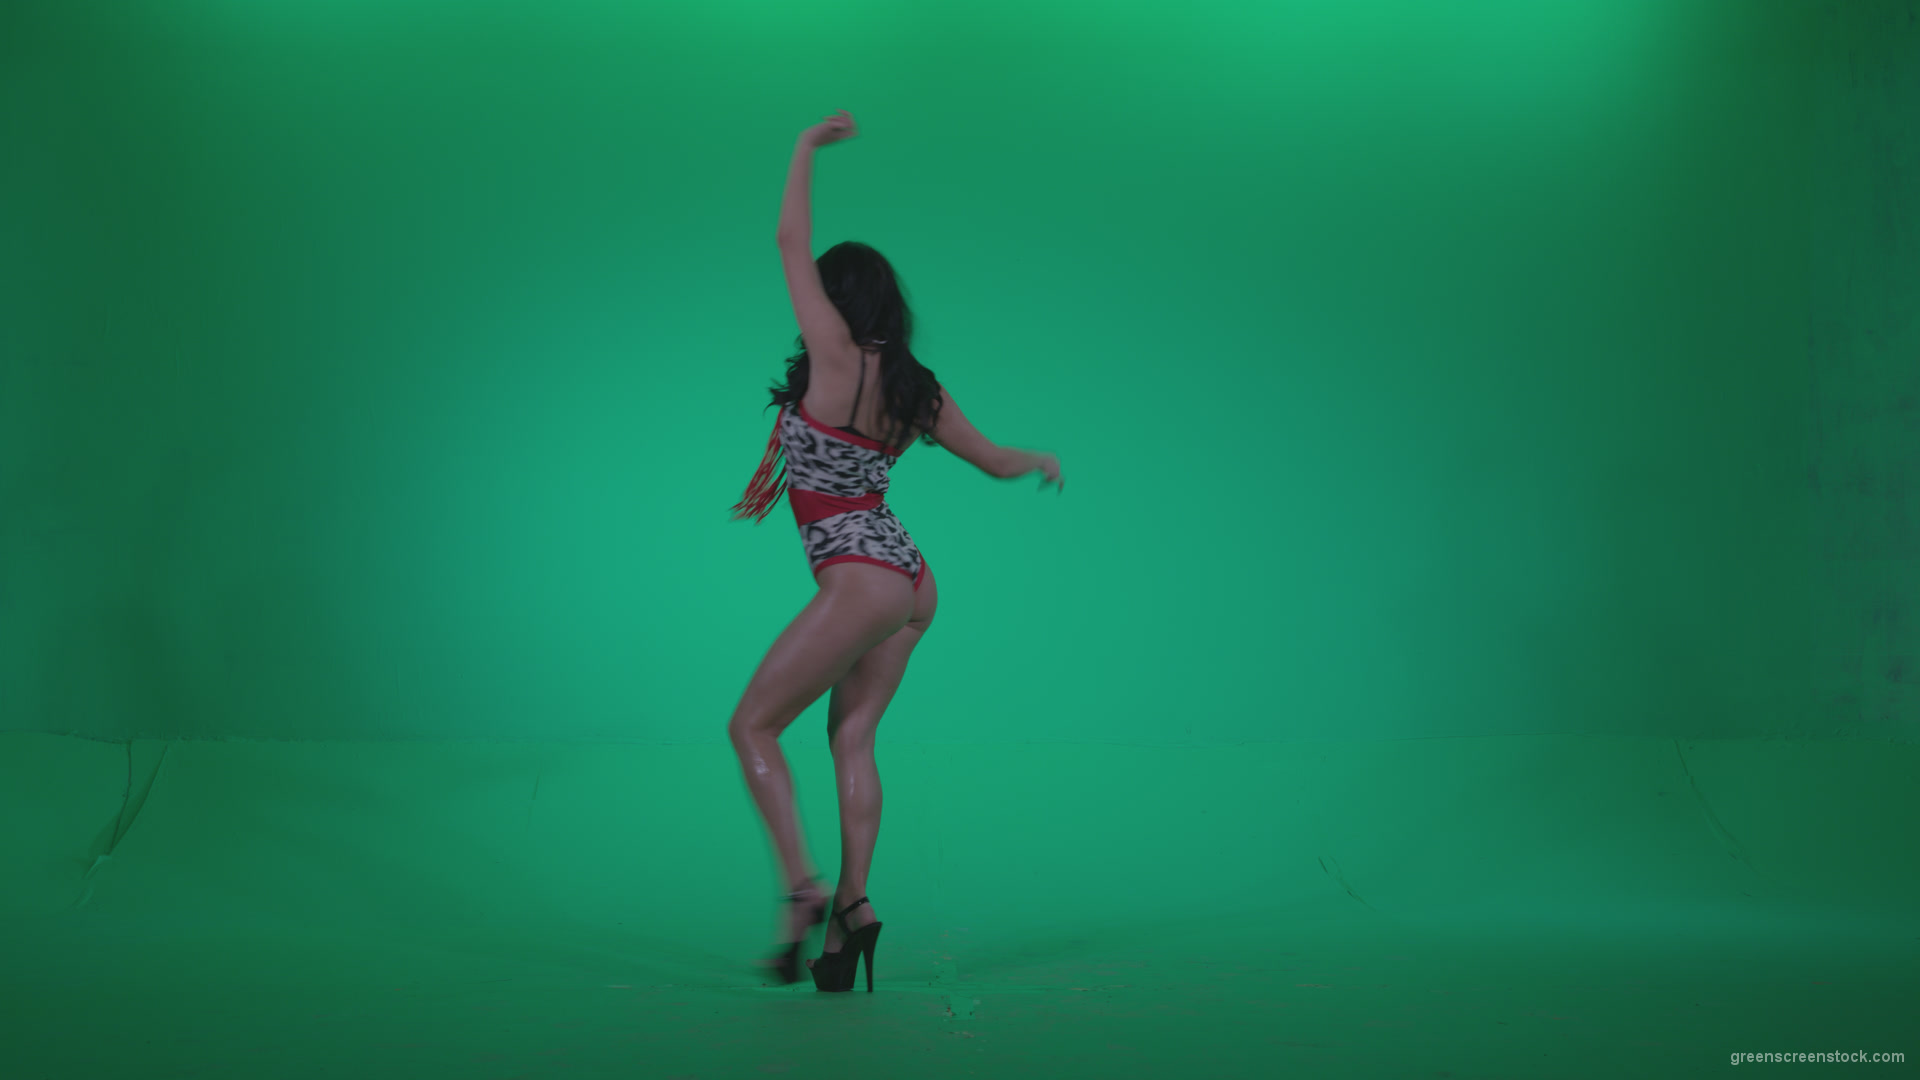 Go-go-Dancer-Red-Dress-r3-Green-Screen-Video-Footage_005 Green Screen Stock